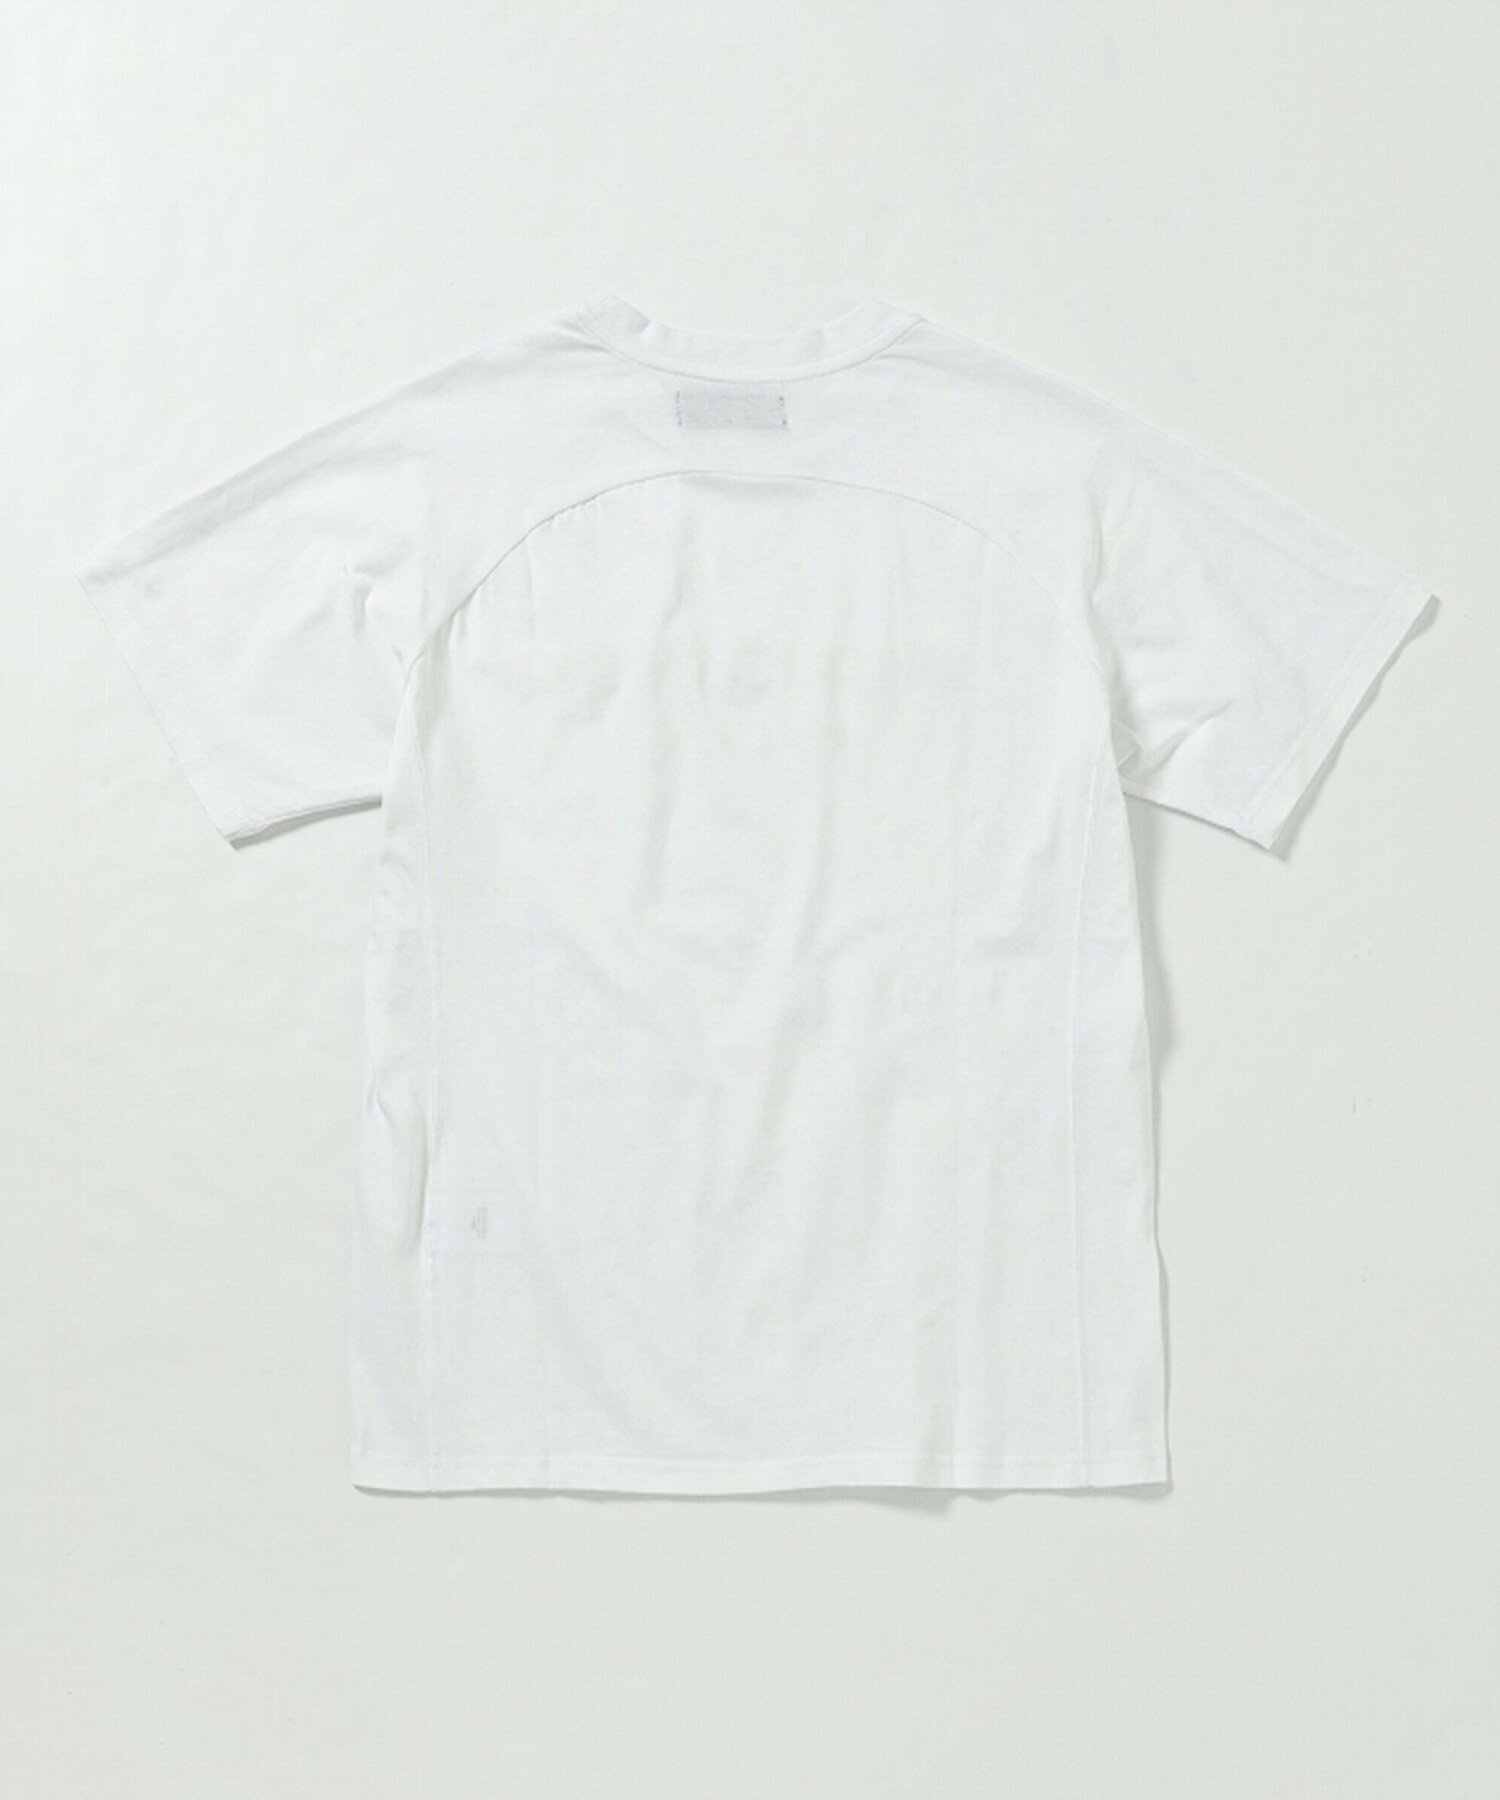 (M)1PIU1UGUALE3 RELAX/UST-24008 ビーズロゴ半袖Tシャツ